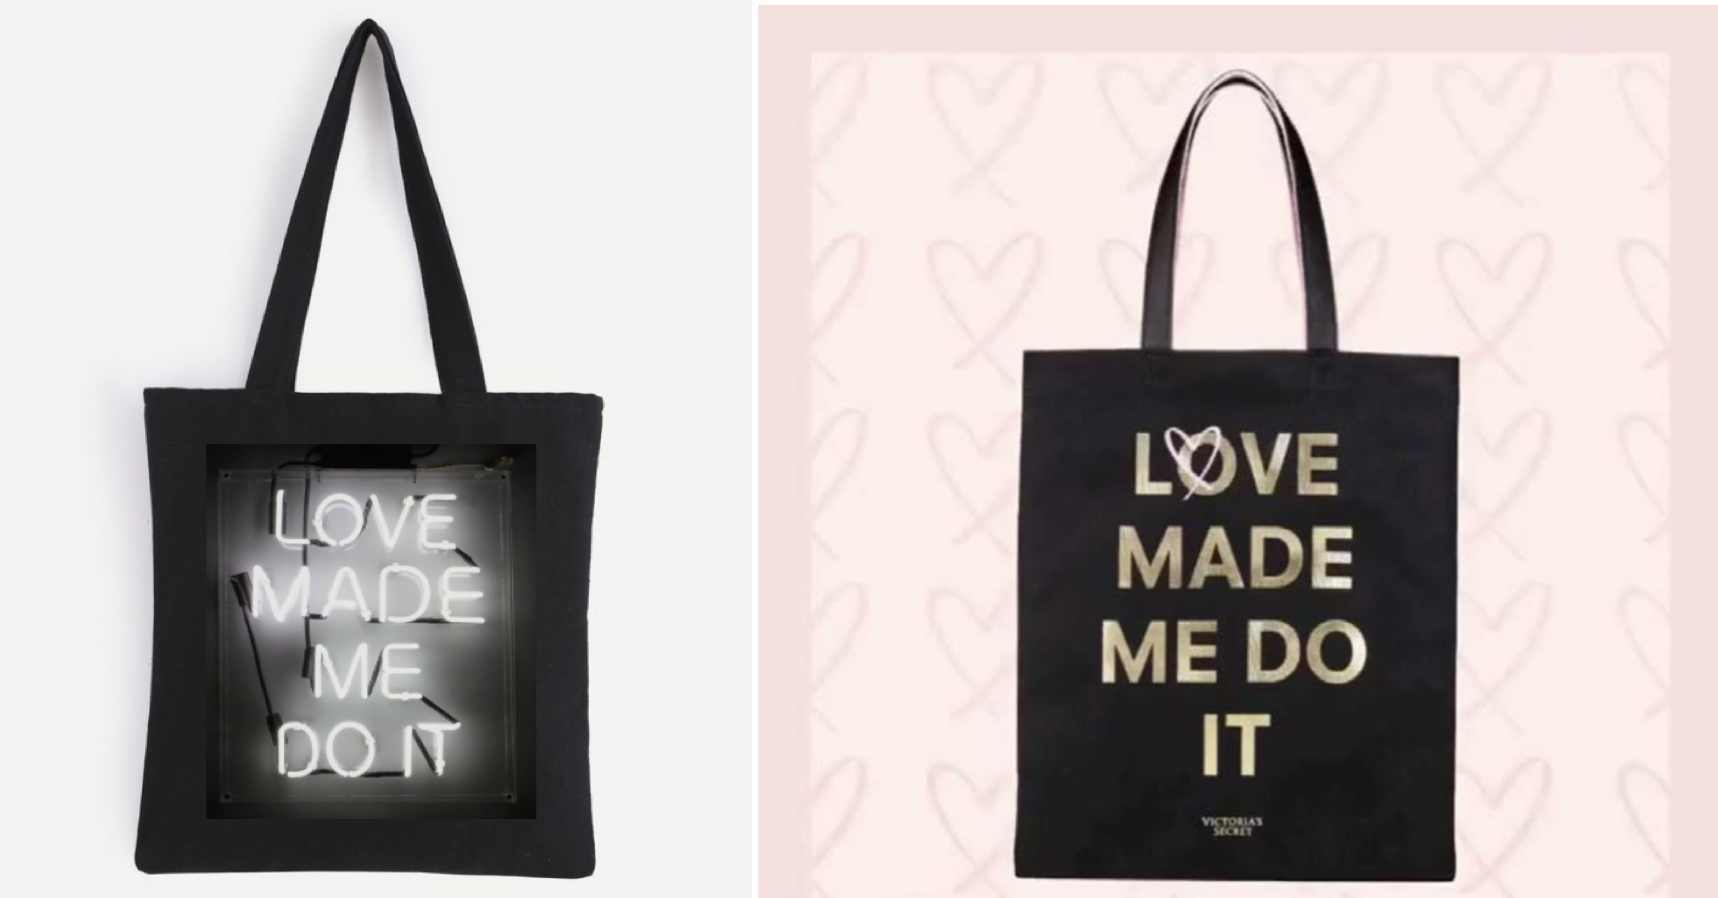  image: Love Made (left) & Victoria's Secret (right) 